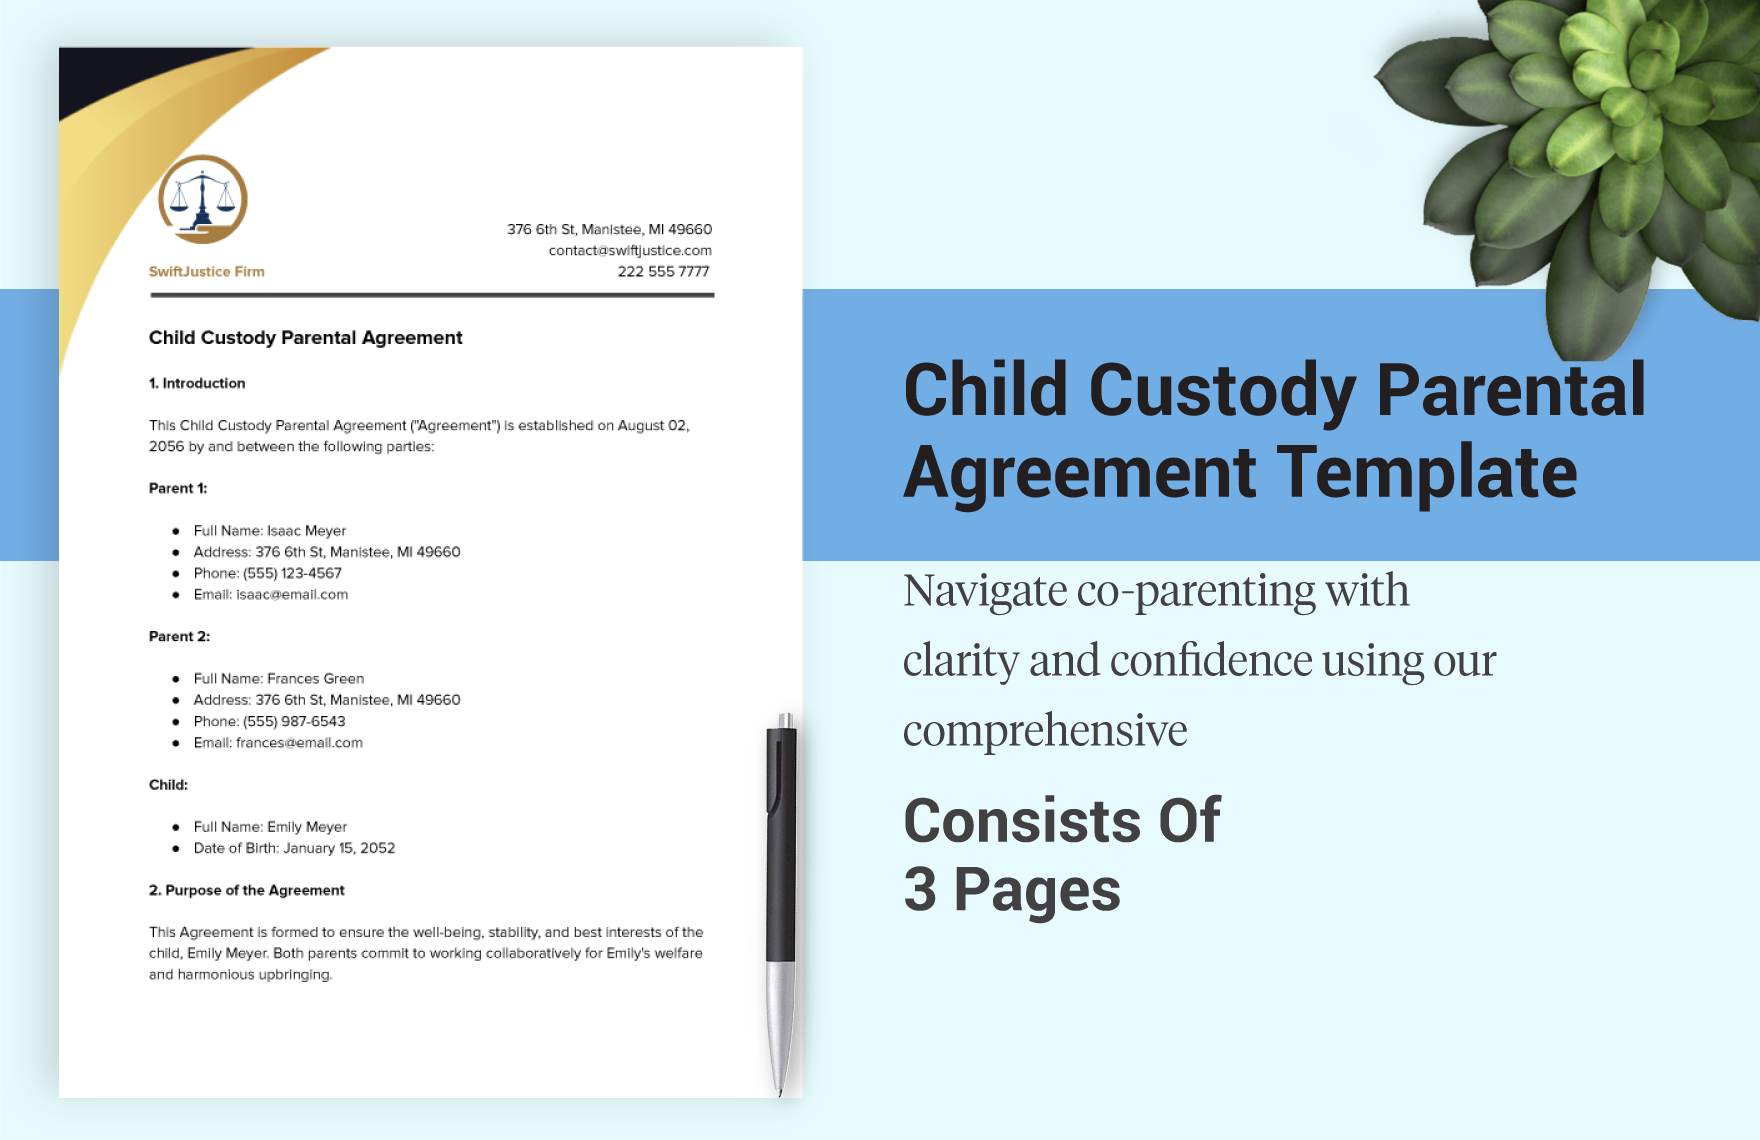 Child Custody Parental Agreement Template